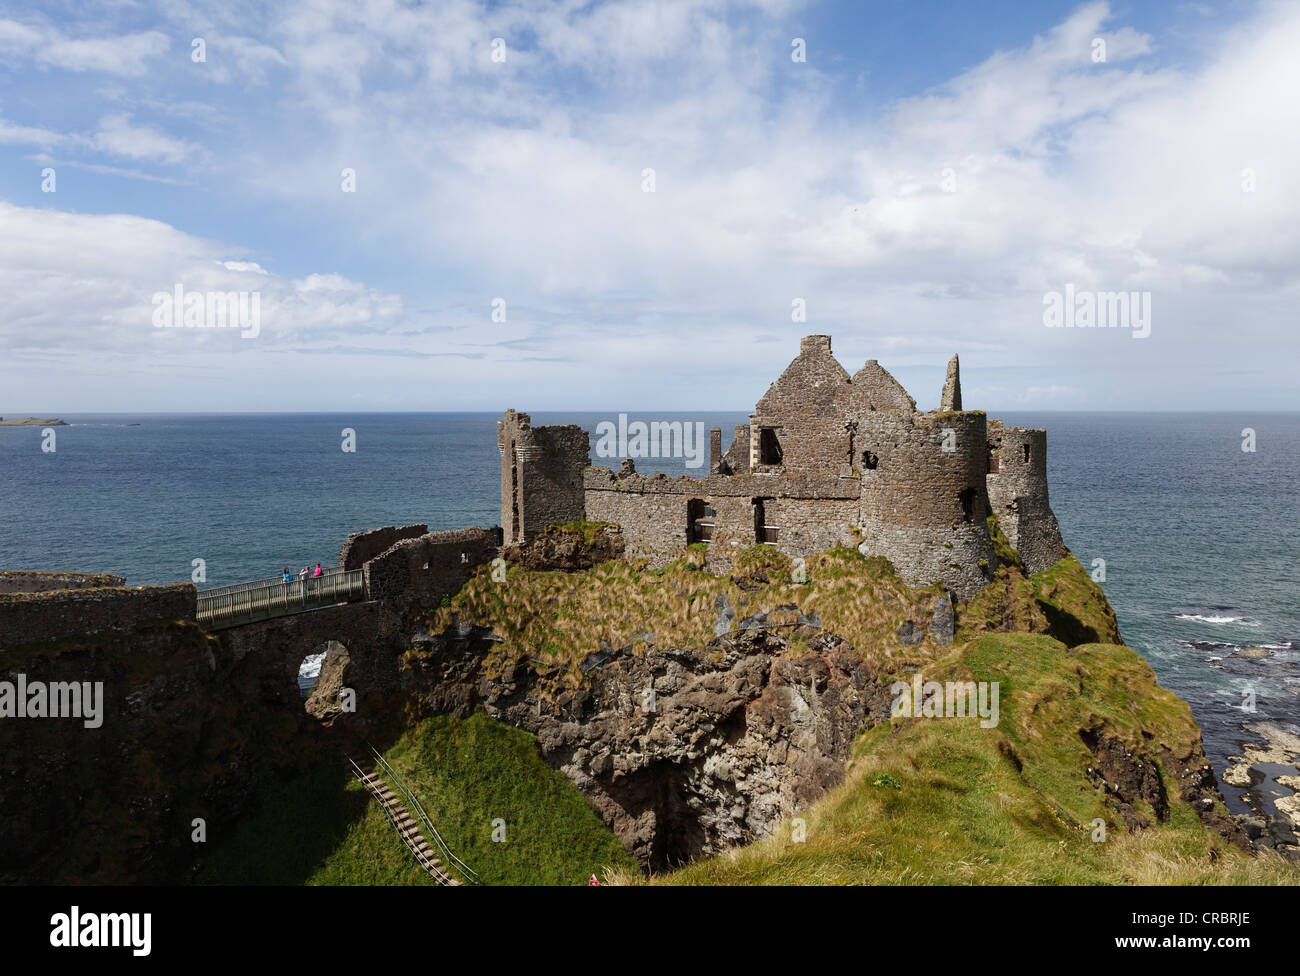 Dunluce Castle, Antrim Coast, County Antrim, Northern Ireland, Great Britain, Europe Stock Photo